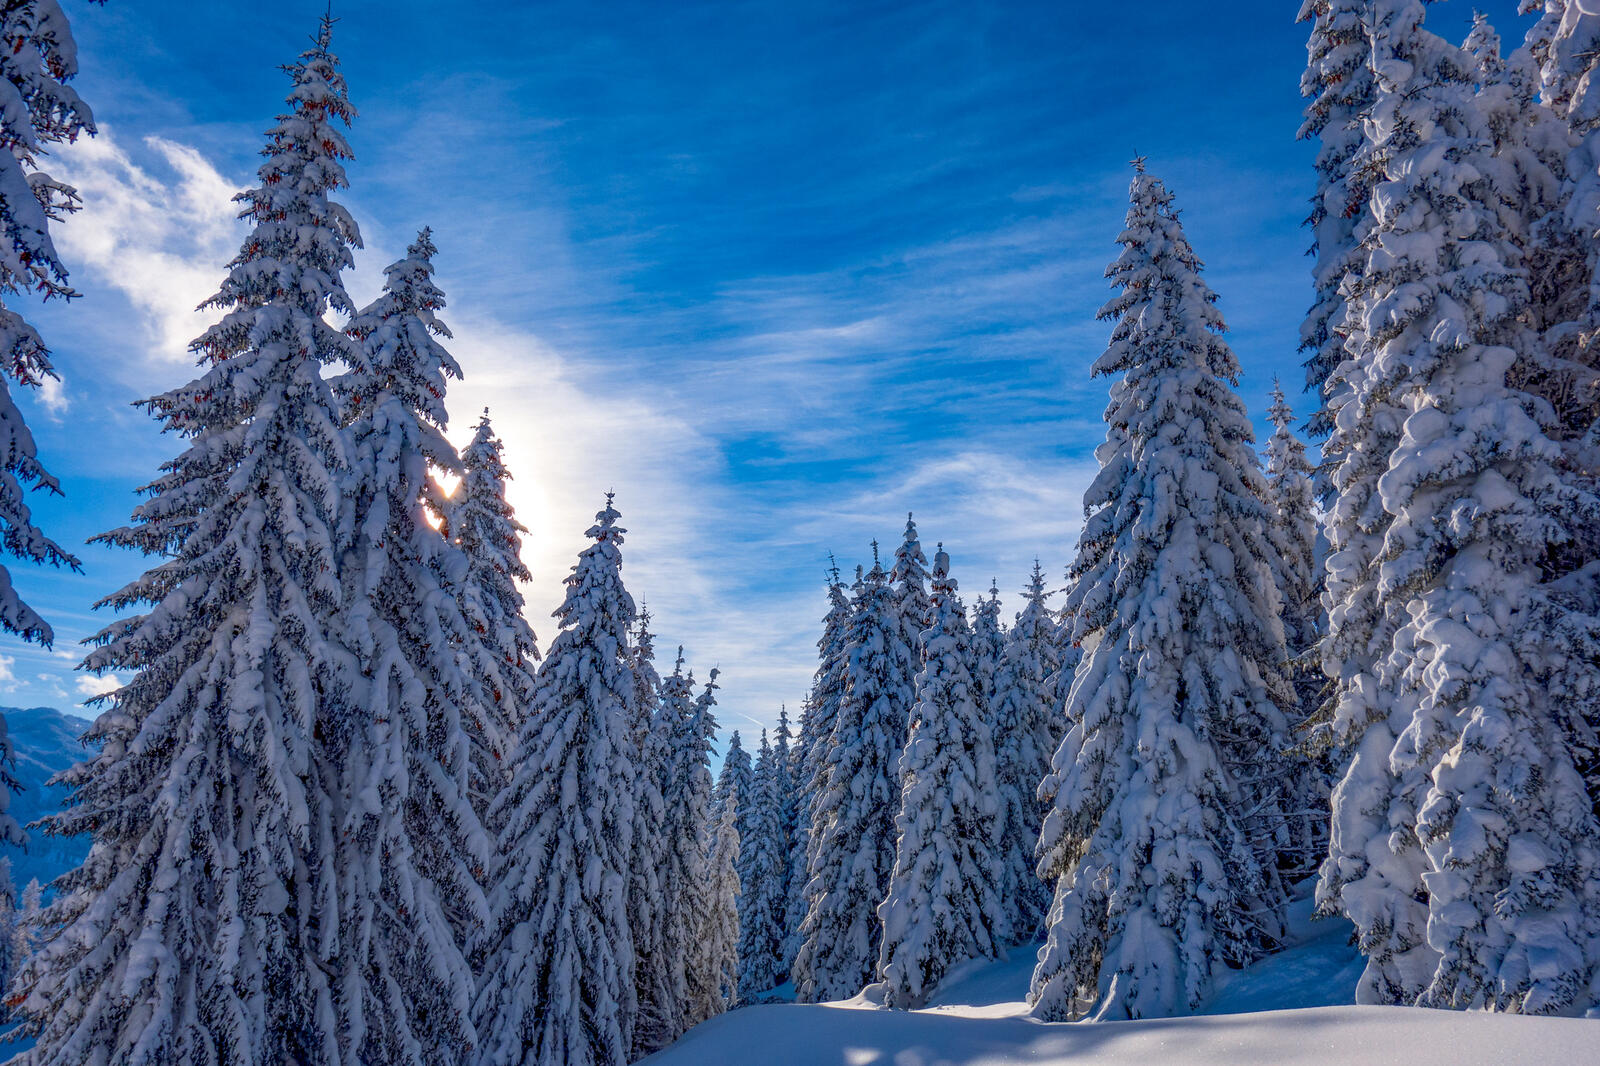 Winter Salzburg and Christmas trees